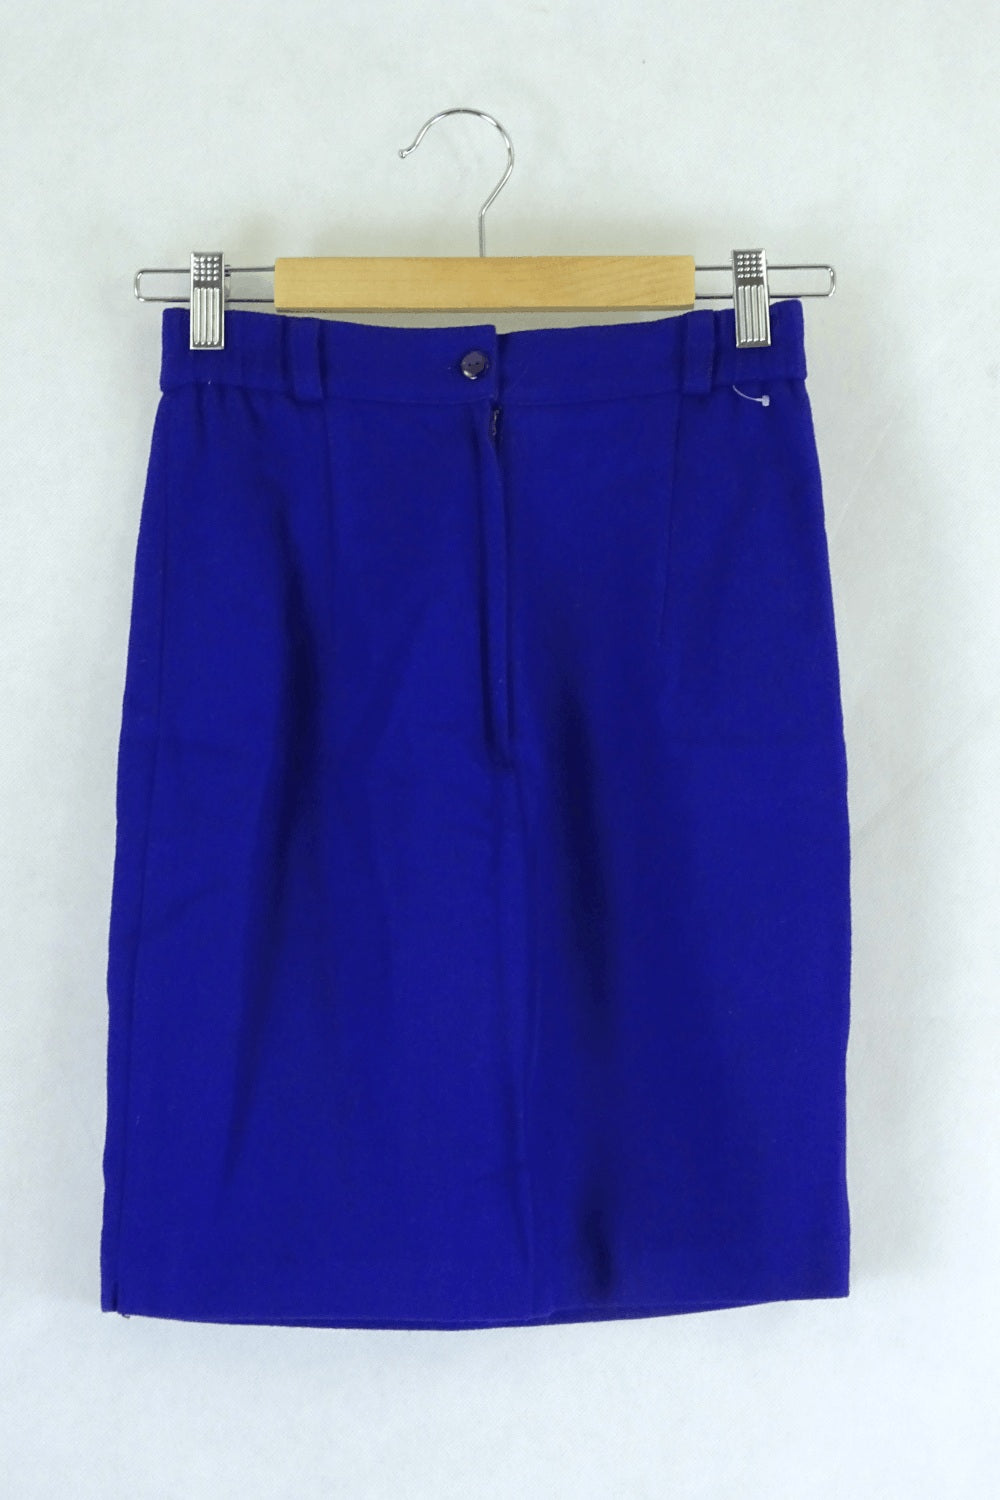 Wanko Fashion Purple Skirt S